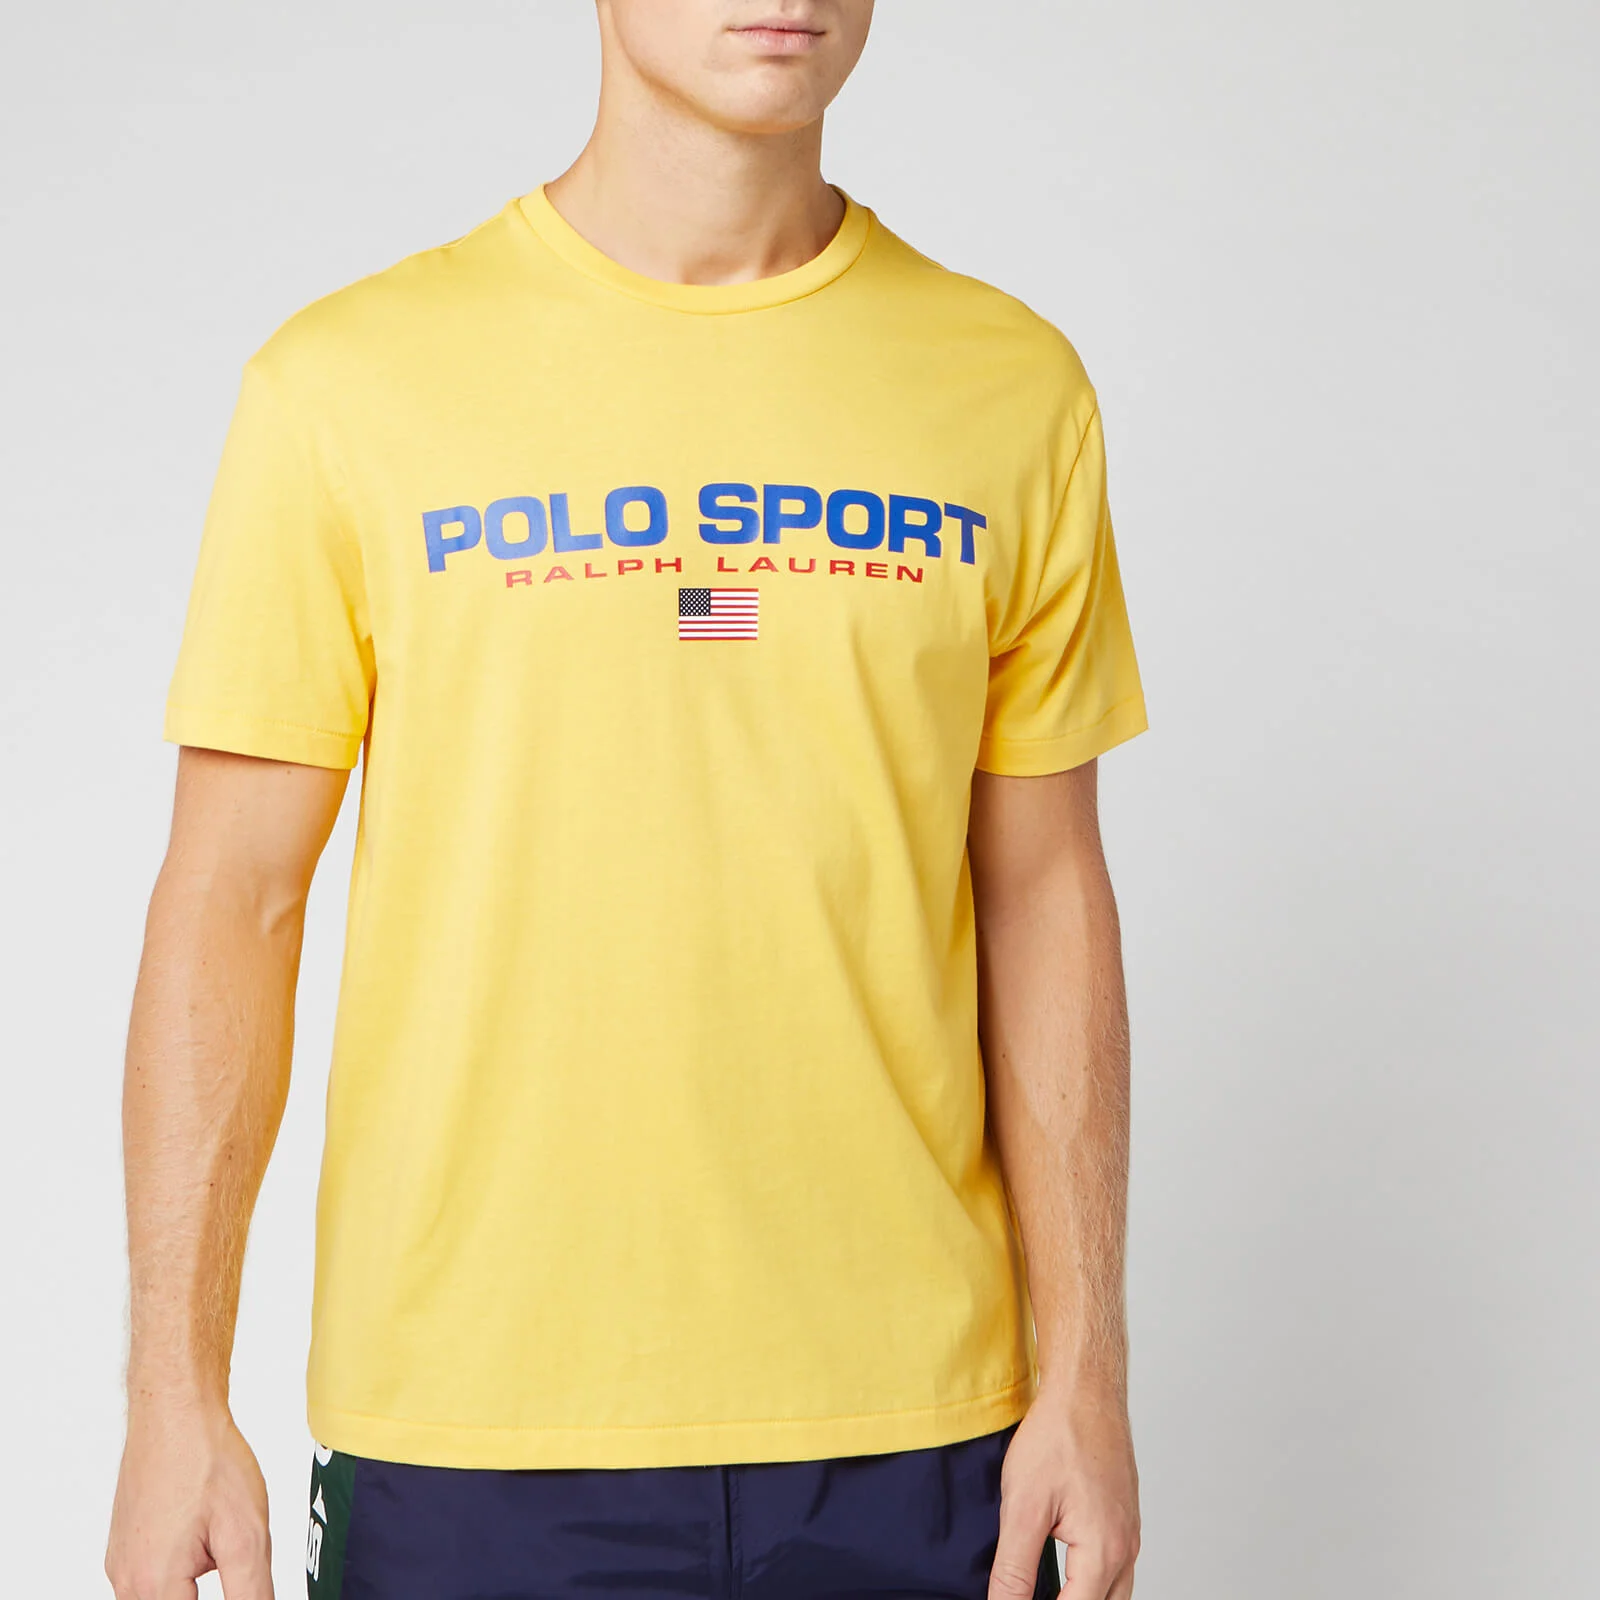 Polo Sport Ralph Lauren Men's T-Shirt - Chrome Yellow Image 1